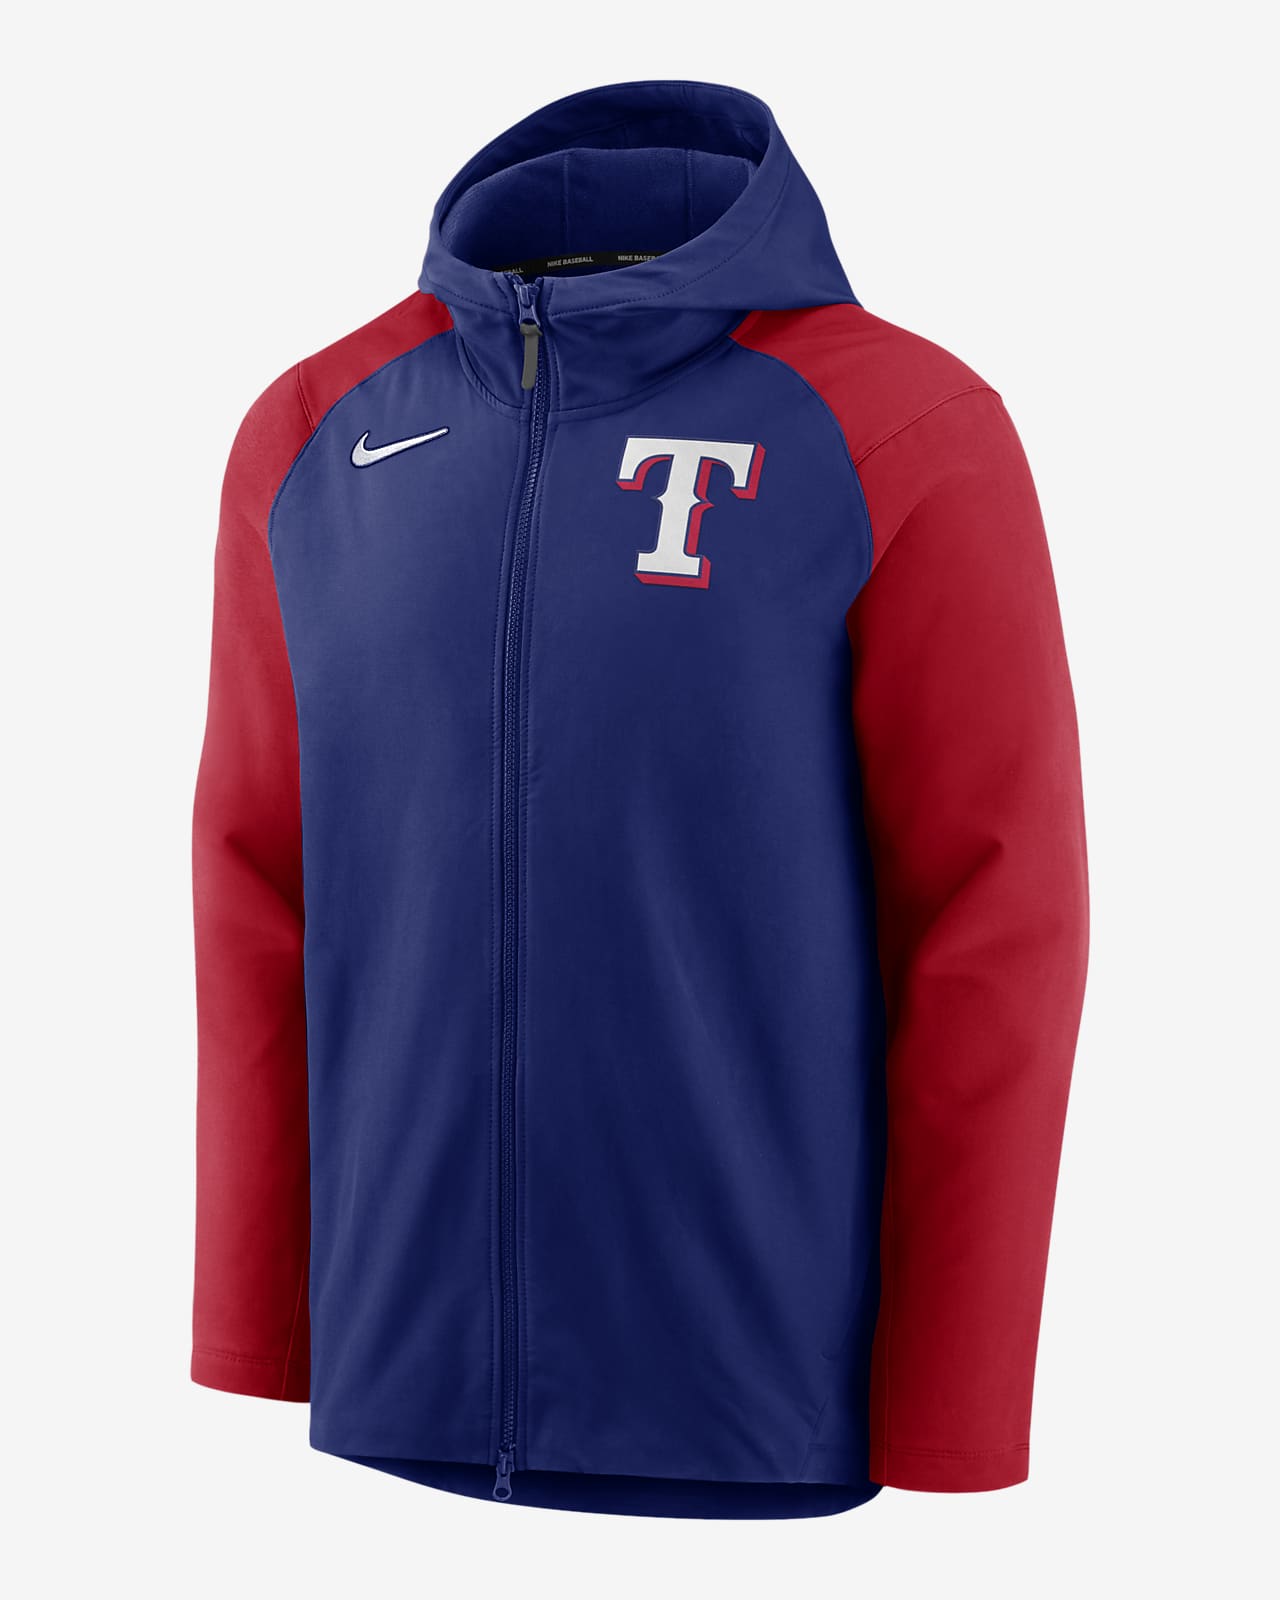 Nike Therma Player (MLB Texas Rangers) Men's Full-Zip Jacket